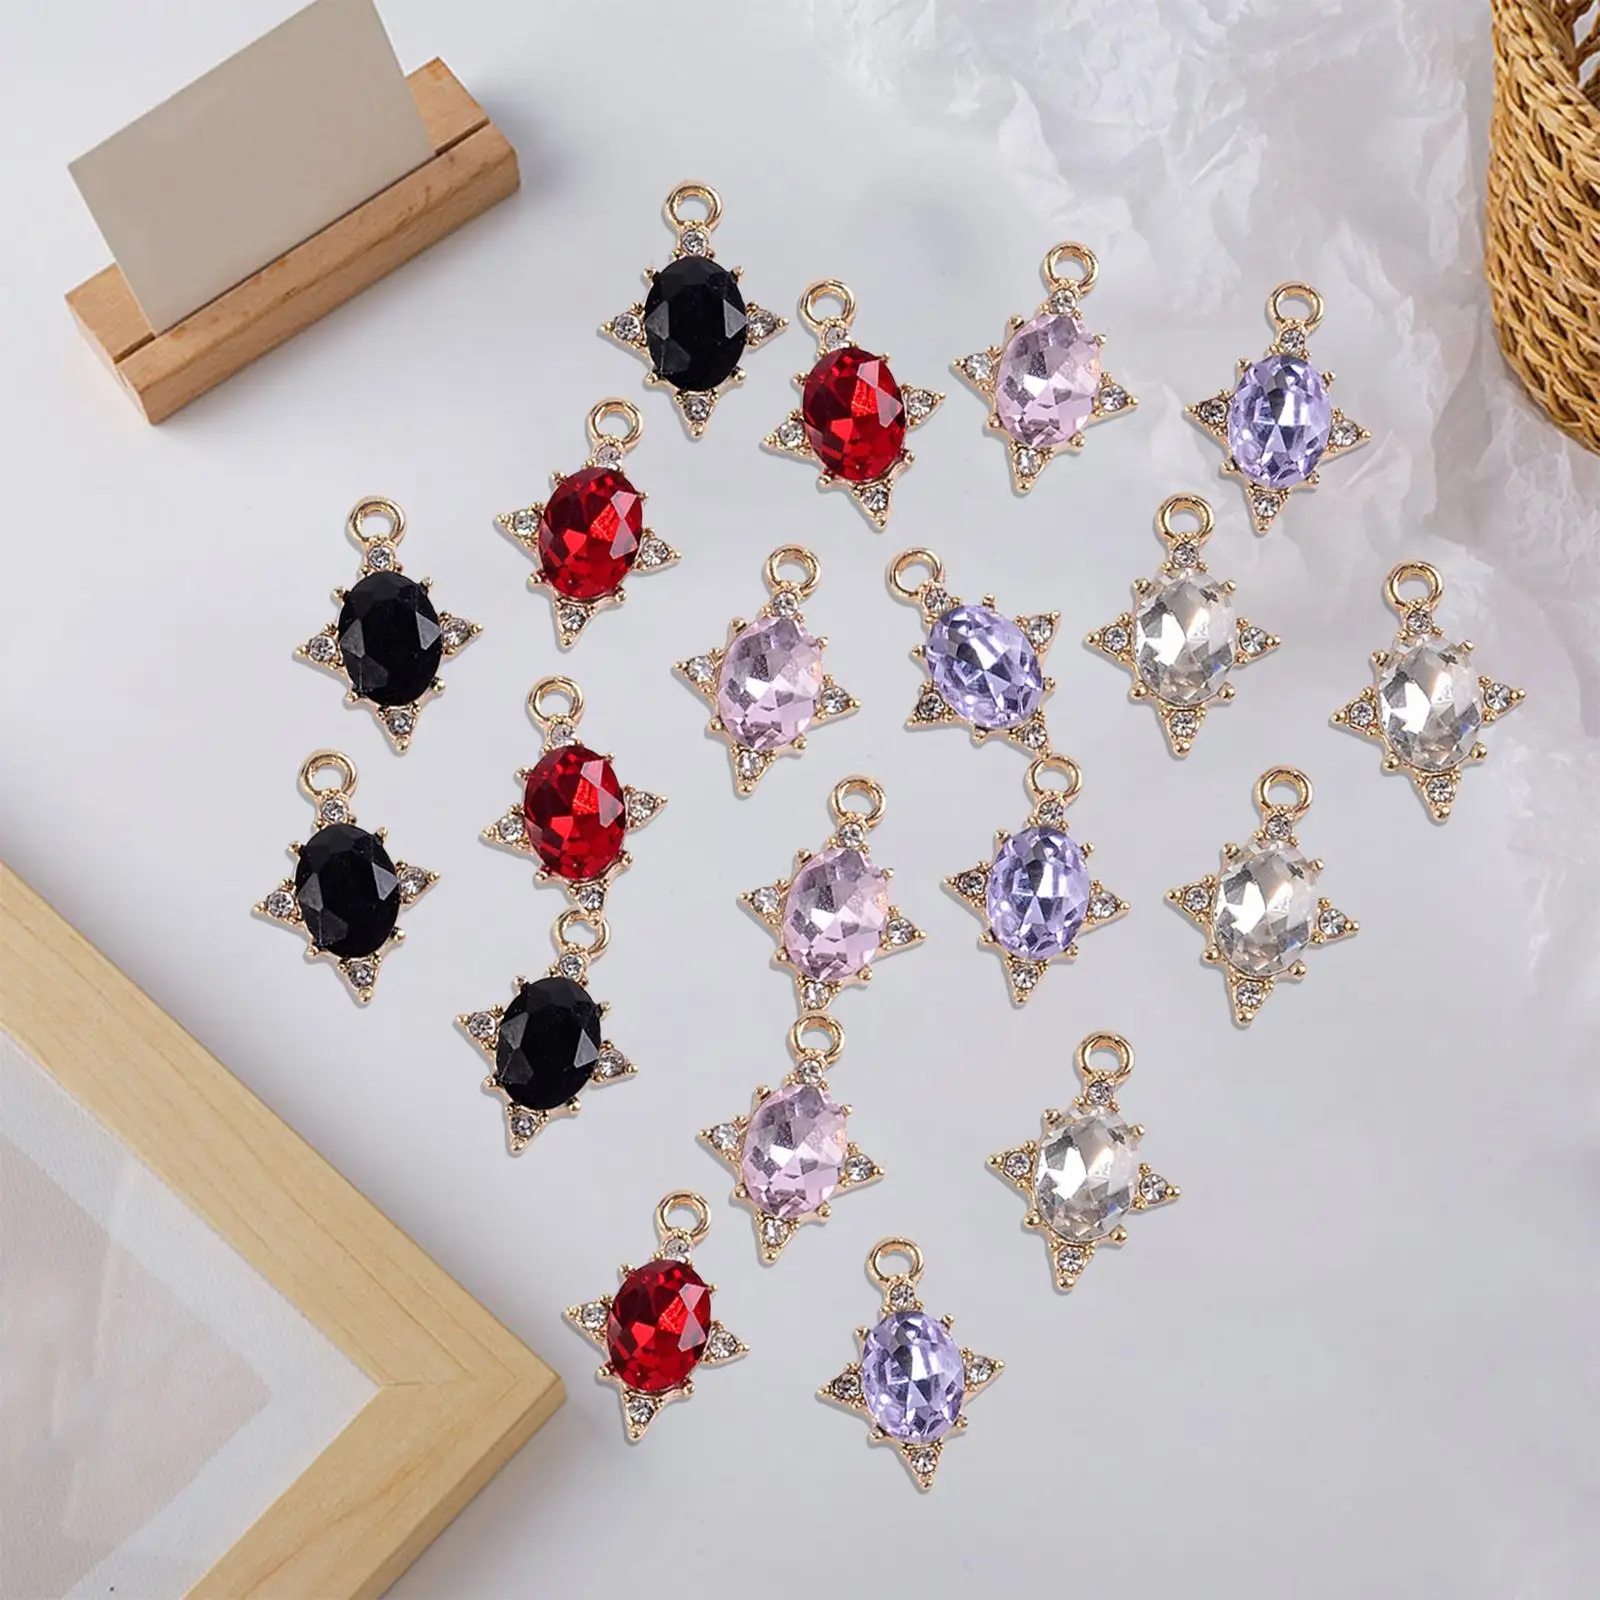 20x Mini Rhinestone Charms Pendants for Jewelry Making Garment Embellishment